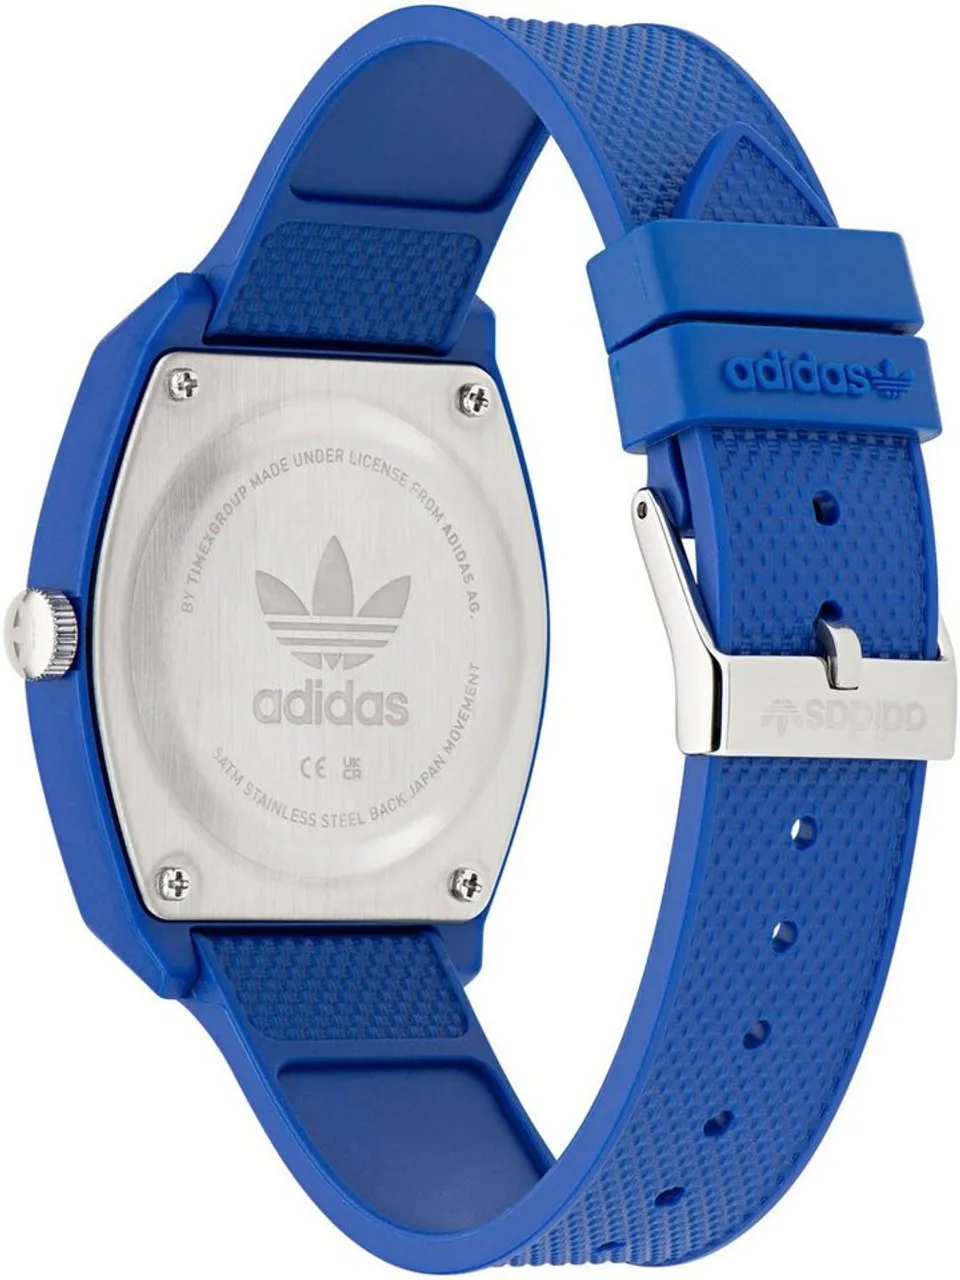 Adidas Originals Quarzuhr PROJECT TWO, AOST230492I - Preise vergleichen